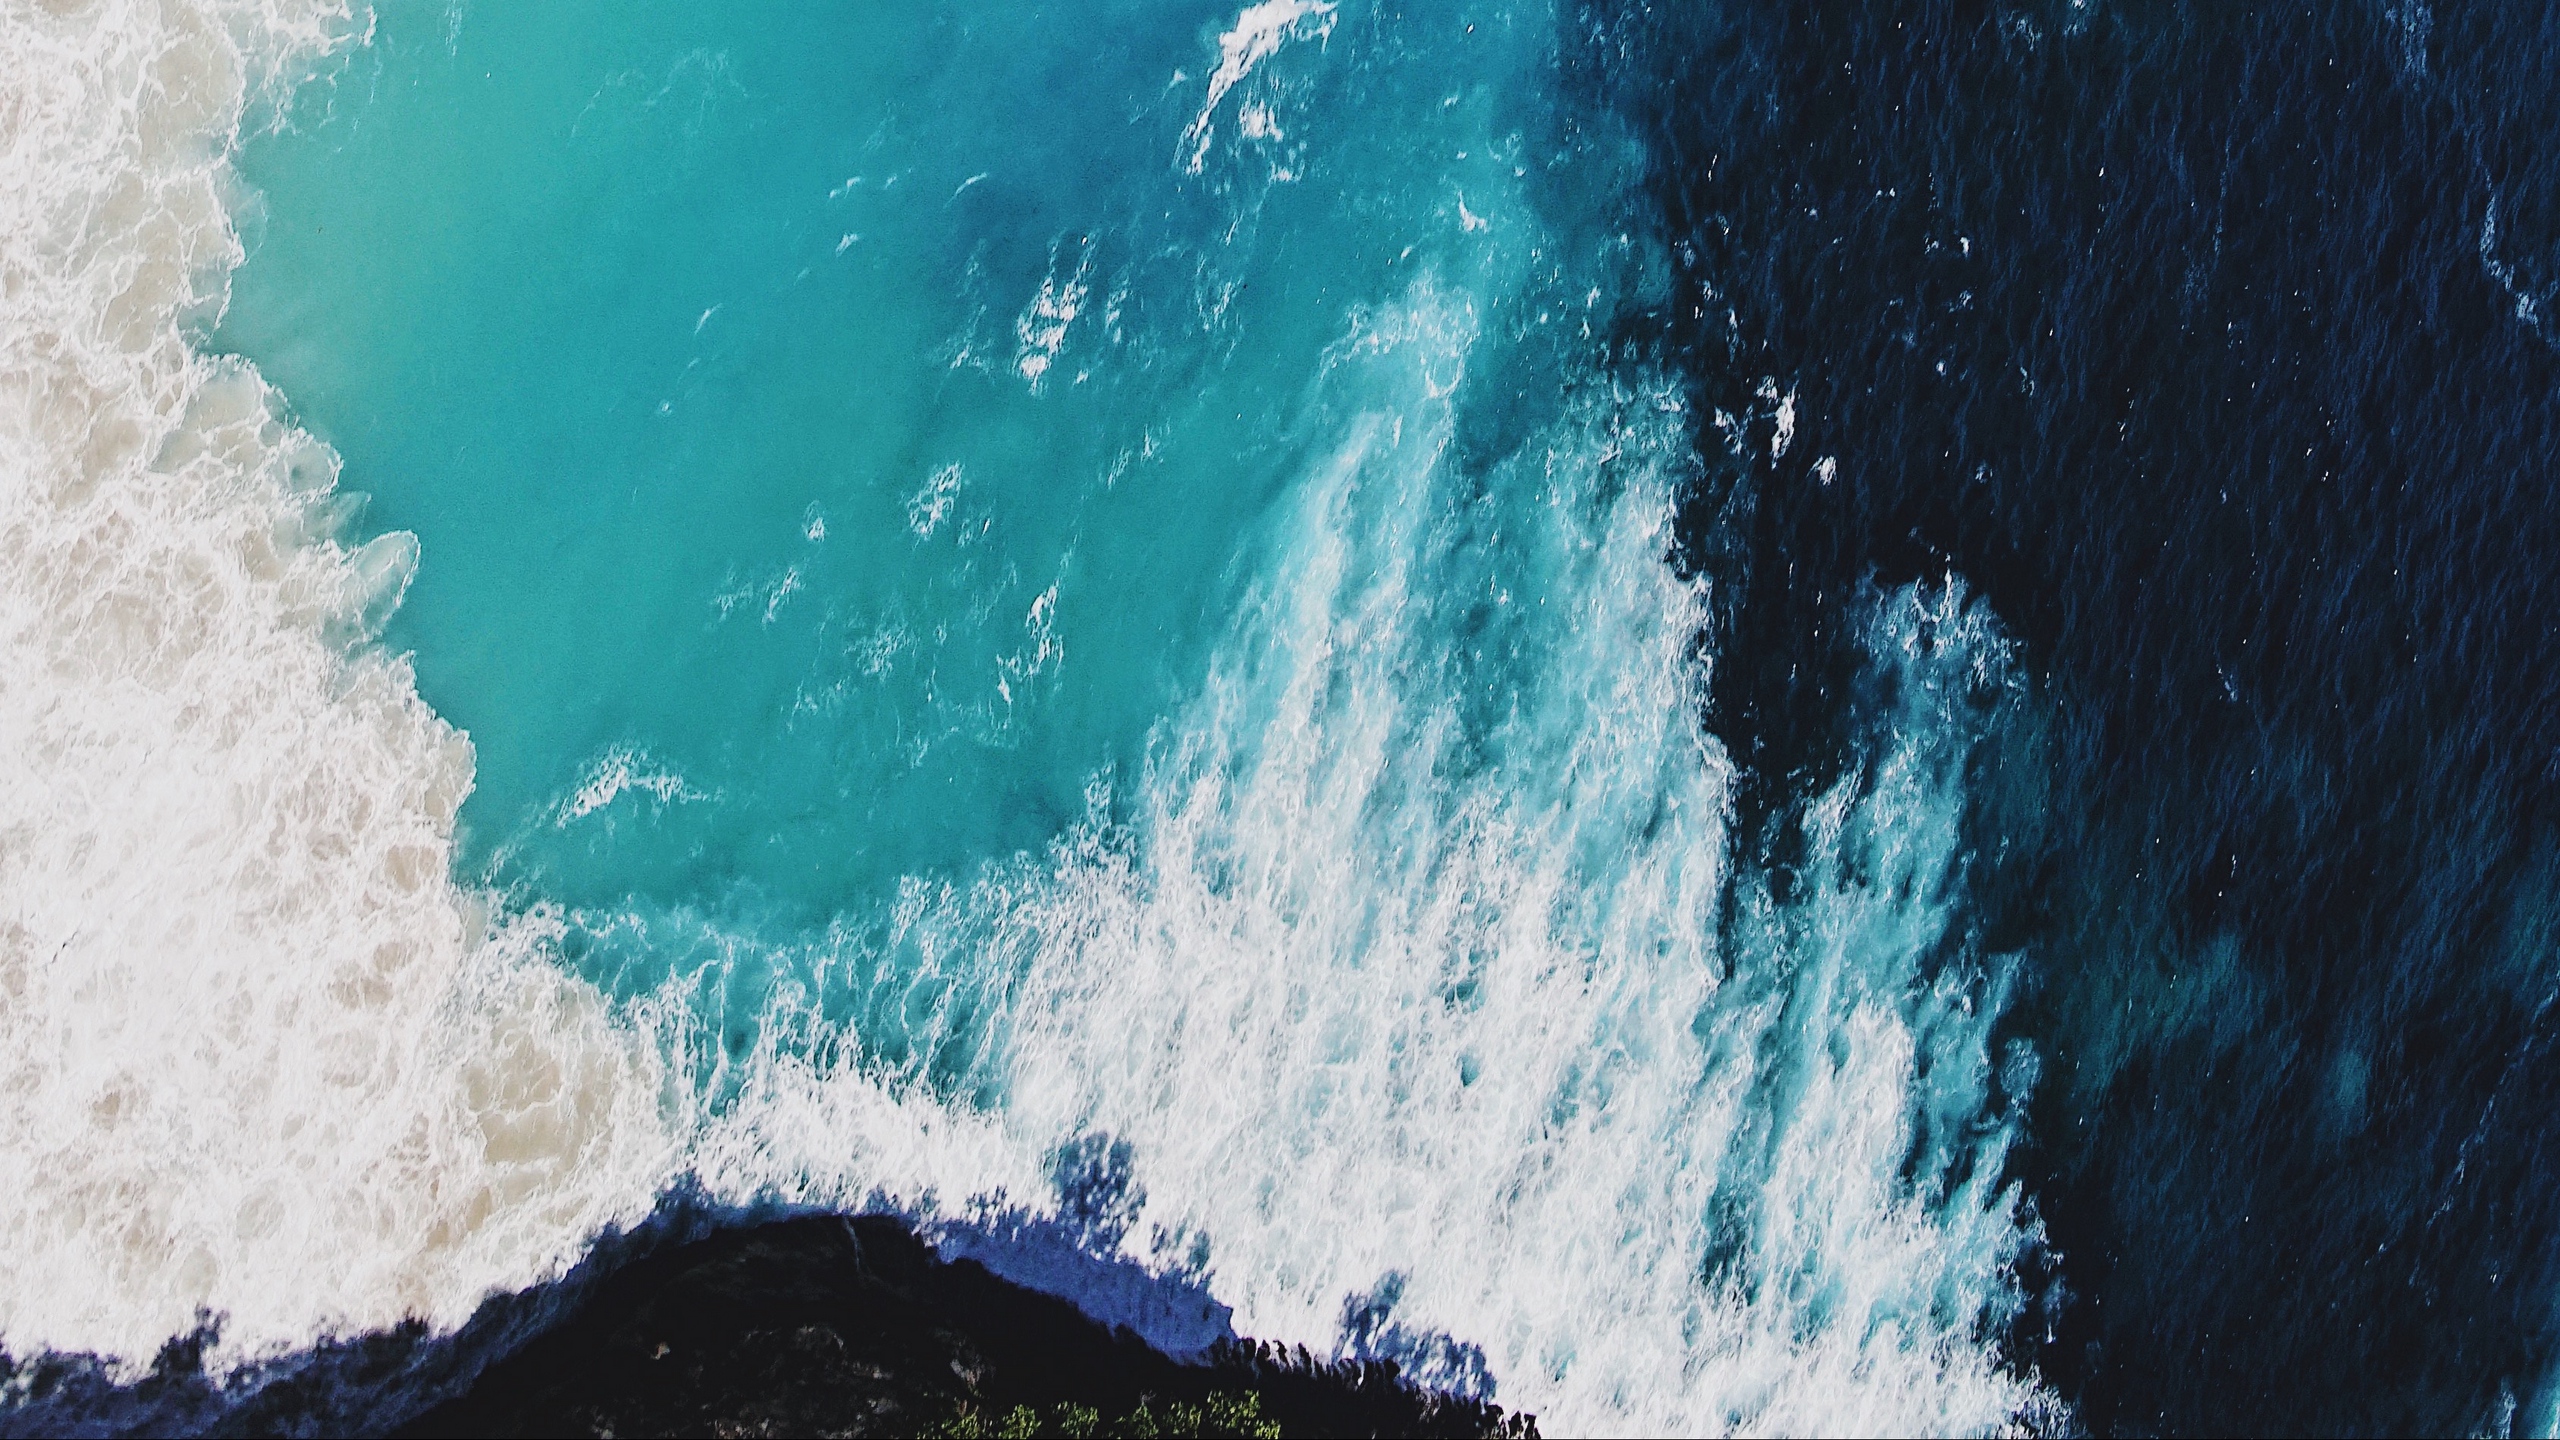 Download wallpaper 2560x1440 ocean, waves, aerial view, surf